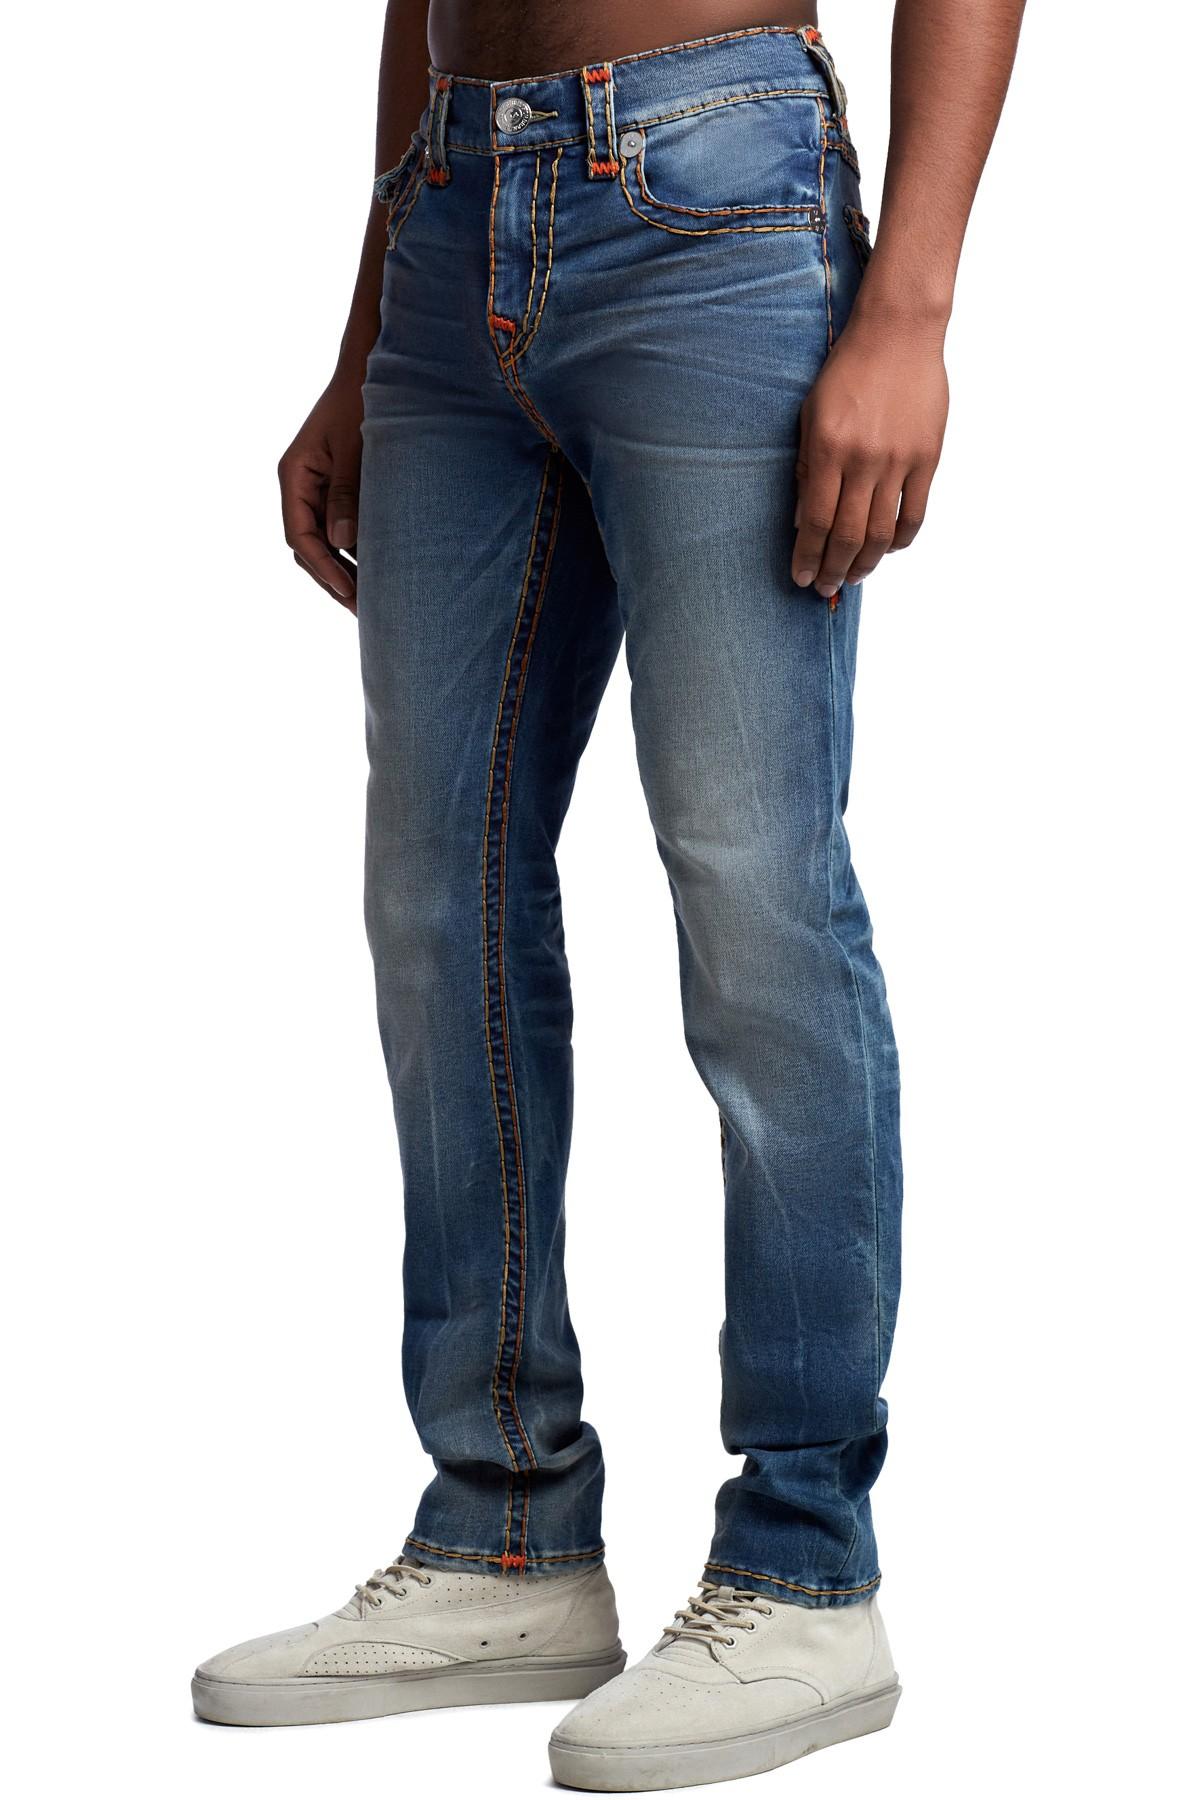 True Religion Rocco Flap Pocket Slim Fit Jeans in Blue for Men - Lyst